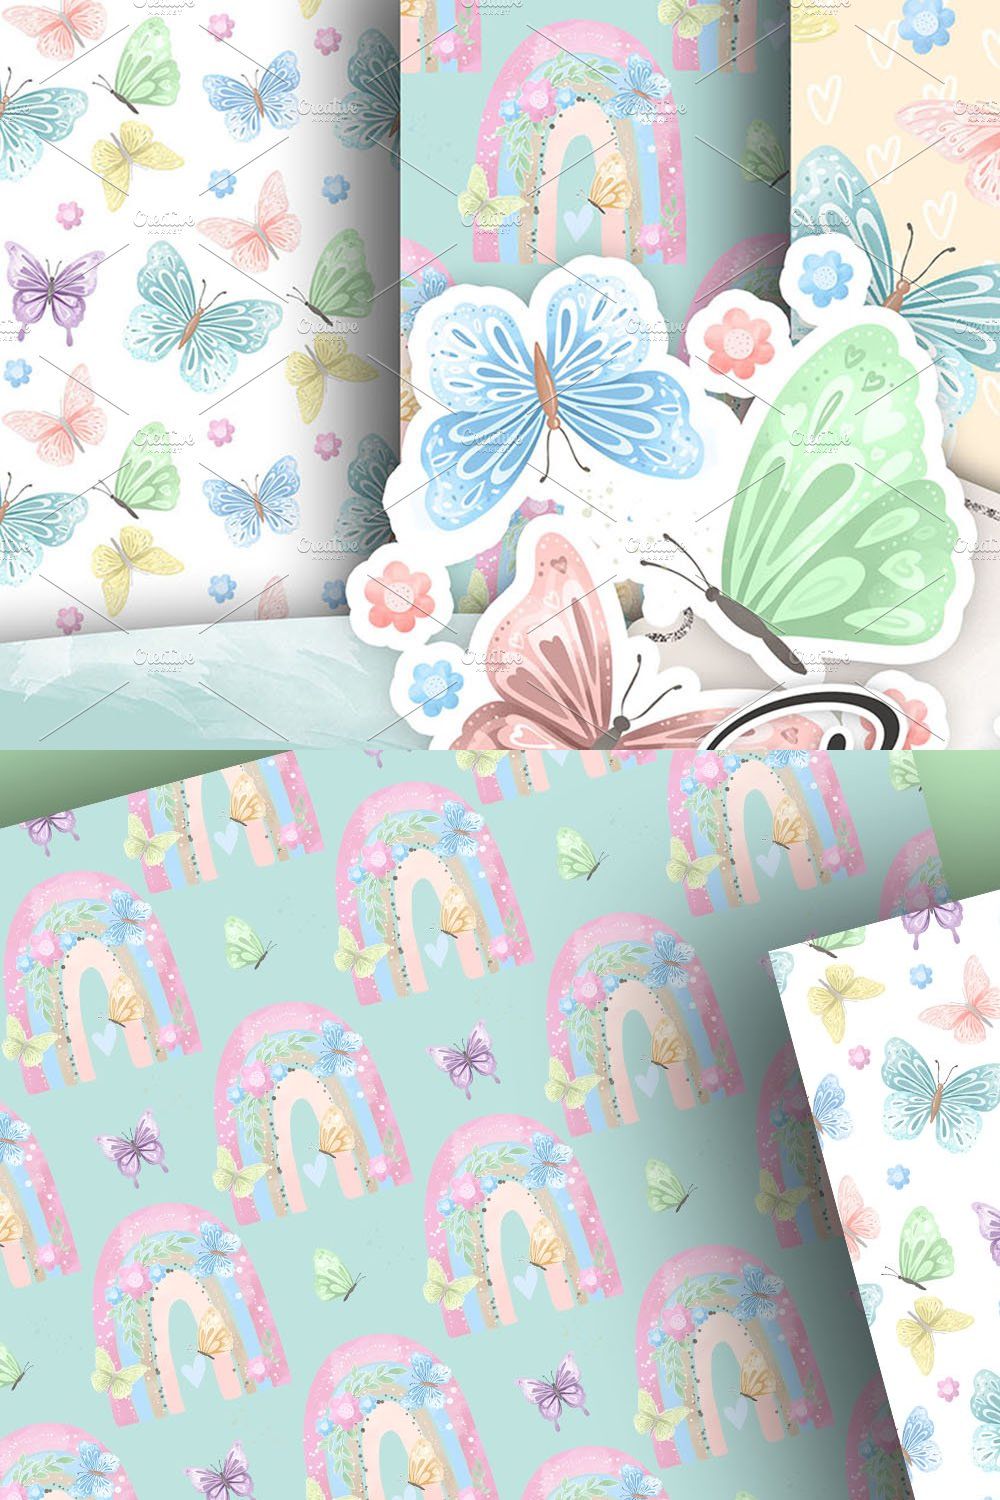 Butterflies digital paper pack pinterest preview image.